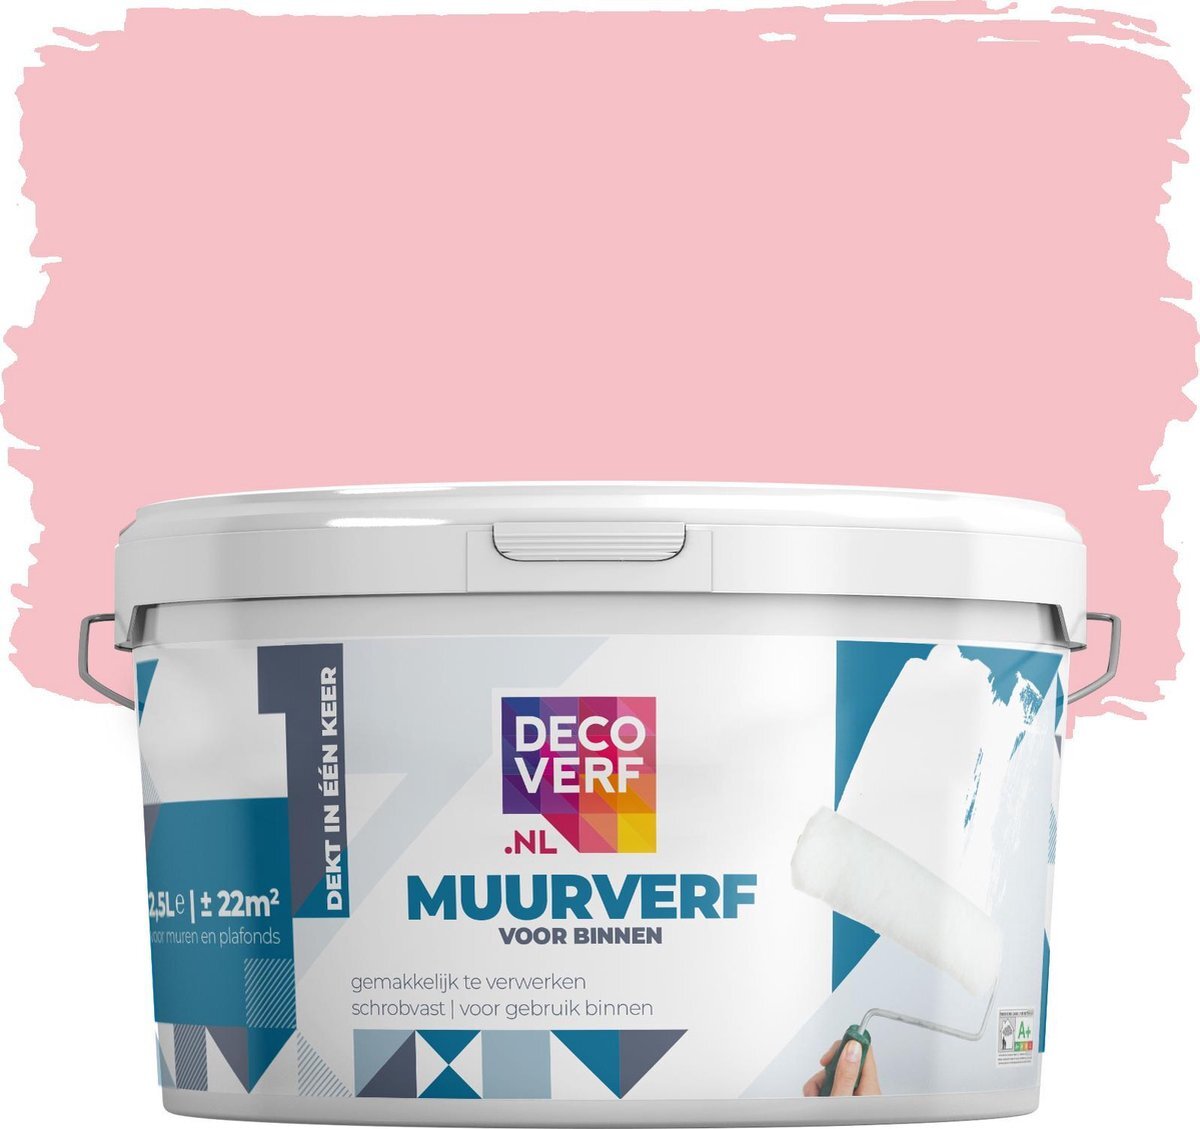 Decoverf.nl Decoverf muurverf mat, Marshmallow roze, 2.5L